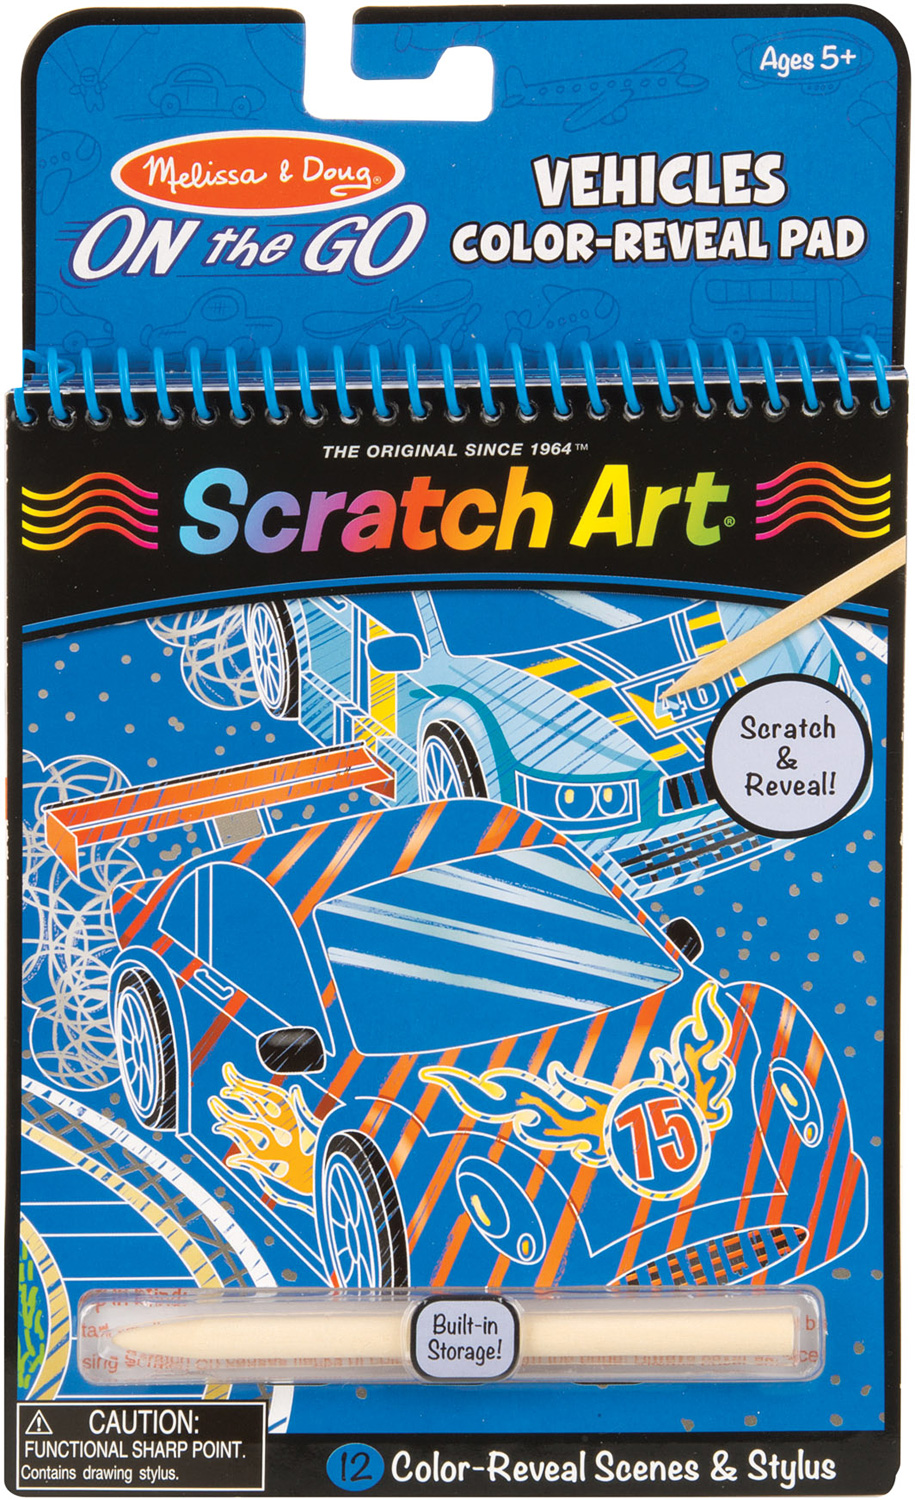 Scratch Art Doodle Pad | Melissa & Doug